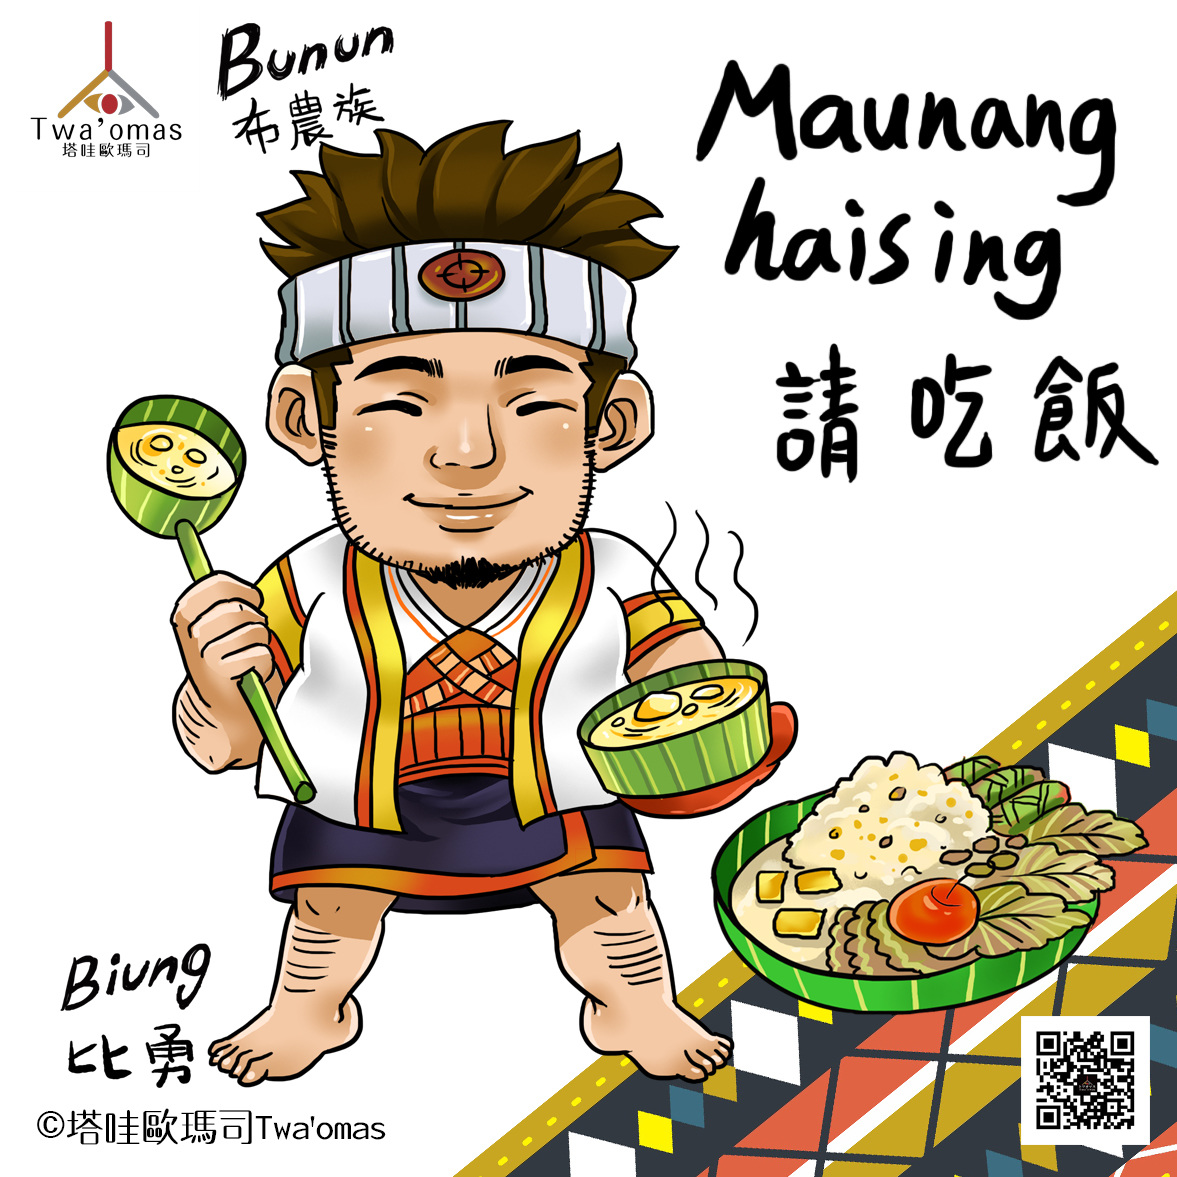 twaomas塔哇歐瑪司-日常-布農族 Bunun-請吃飯Maunang Haising.jpg